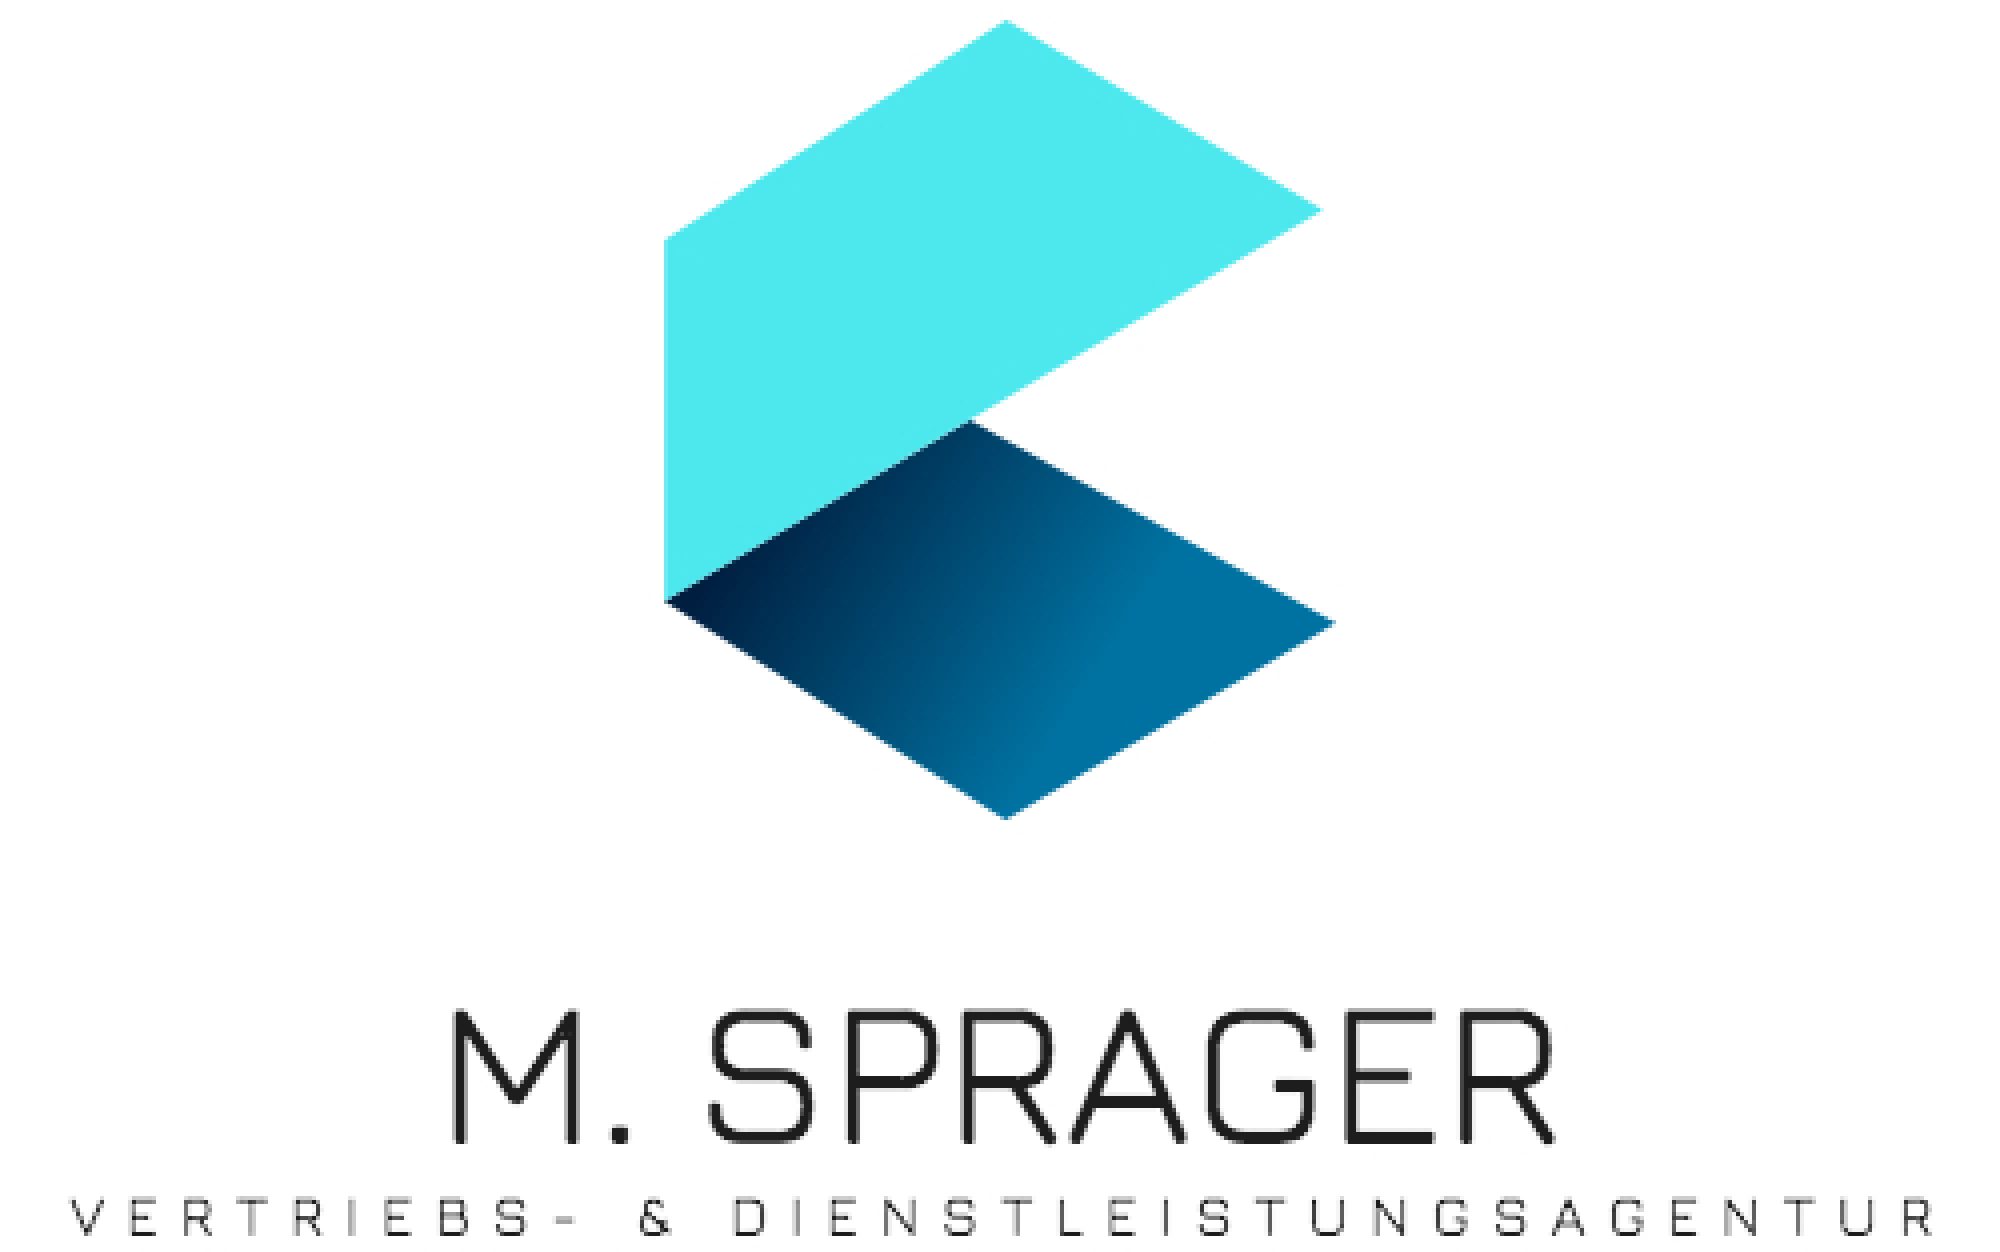 M. Sprager